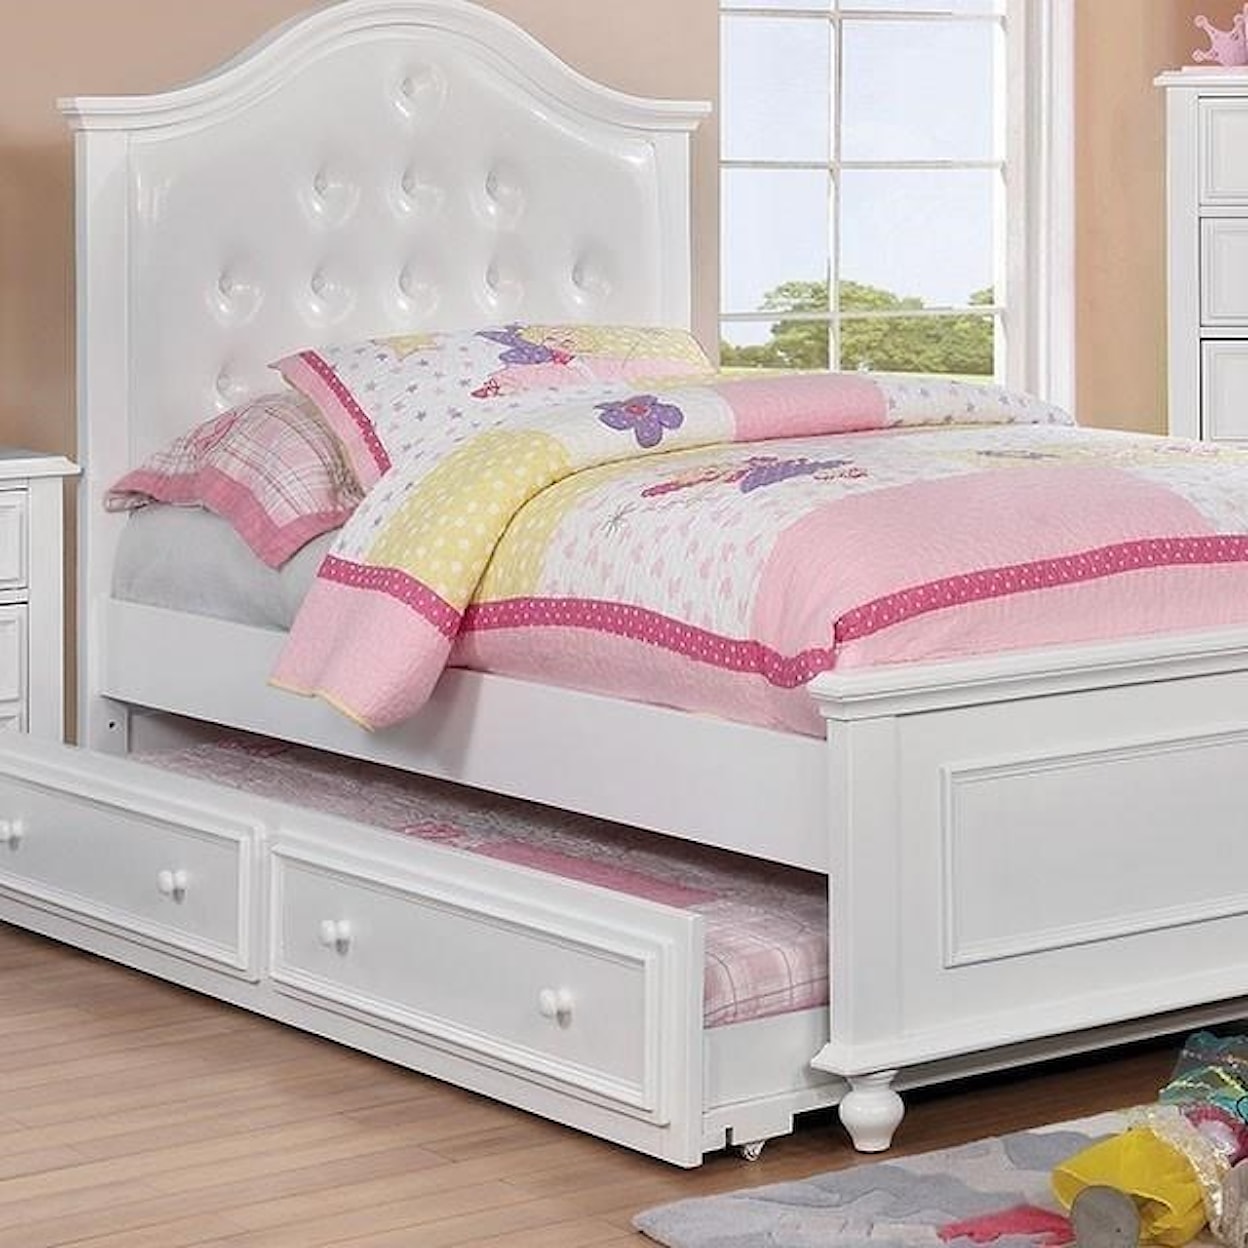 Furniture of America Olivia Full Bed